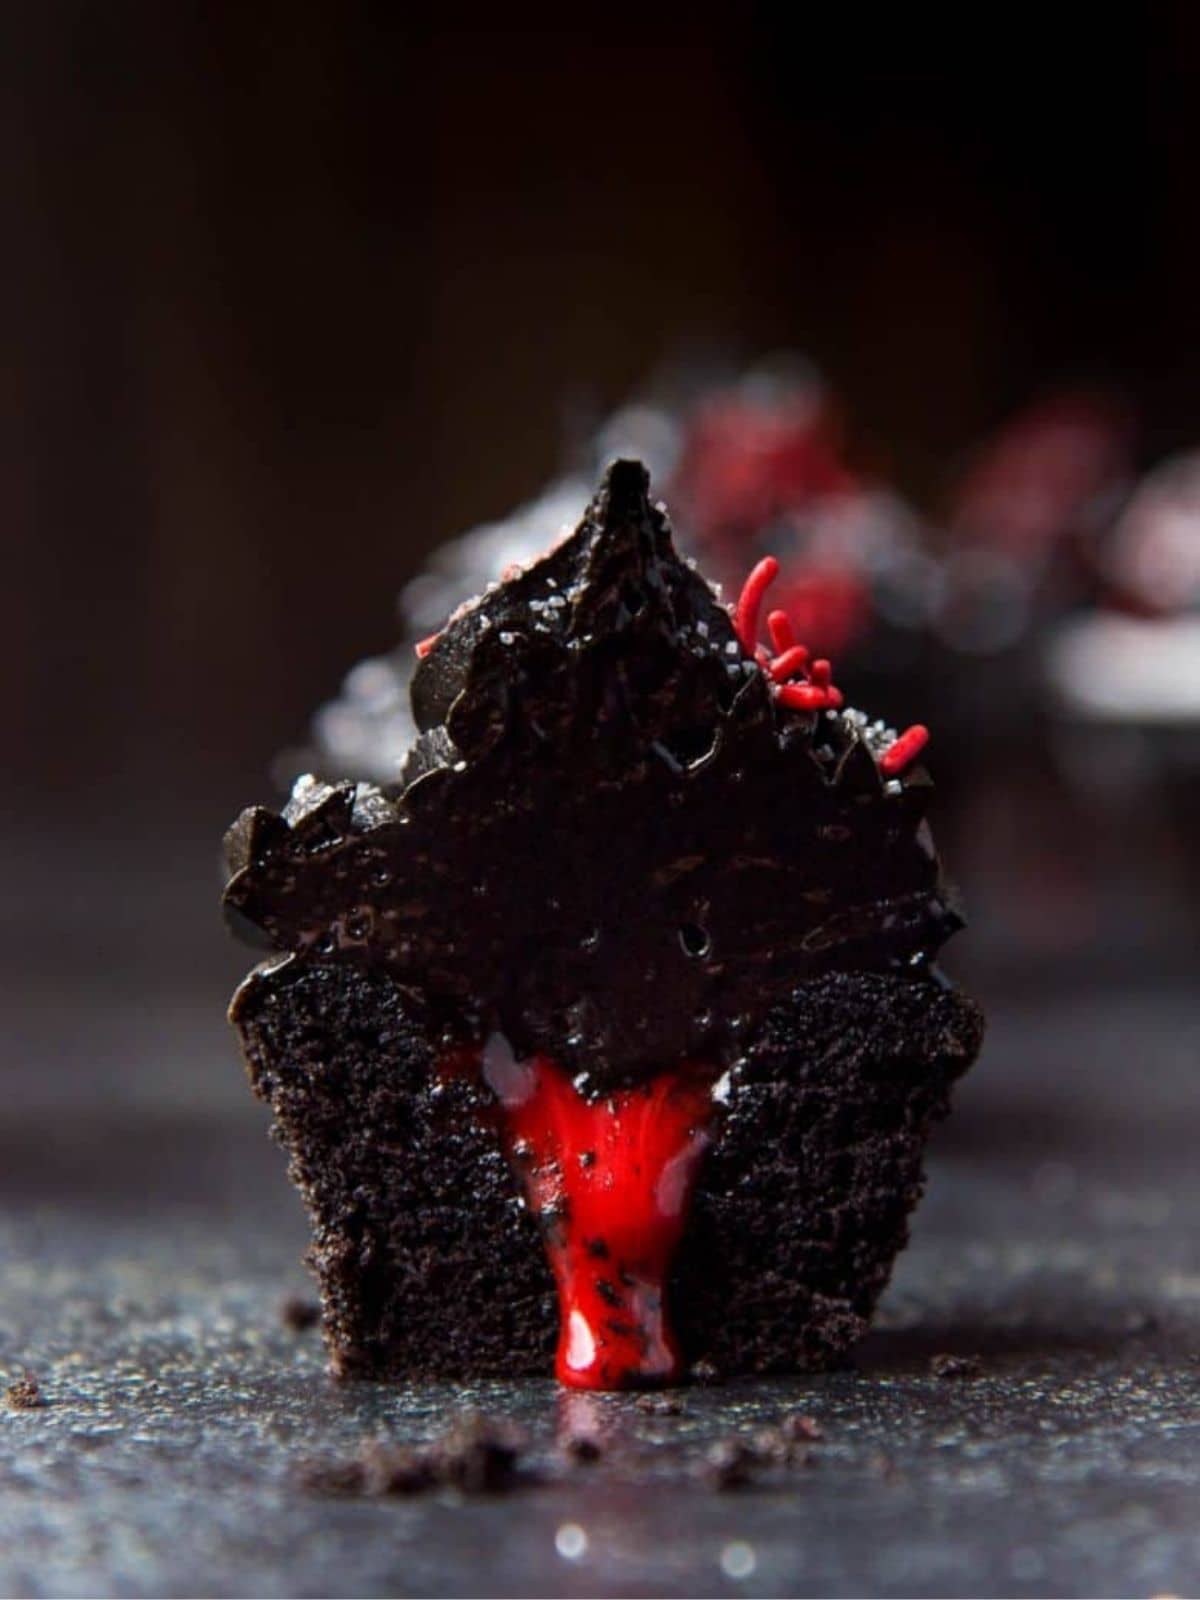 Bleeding black cupcakes.